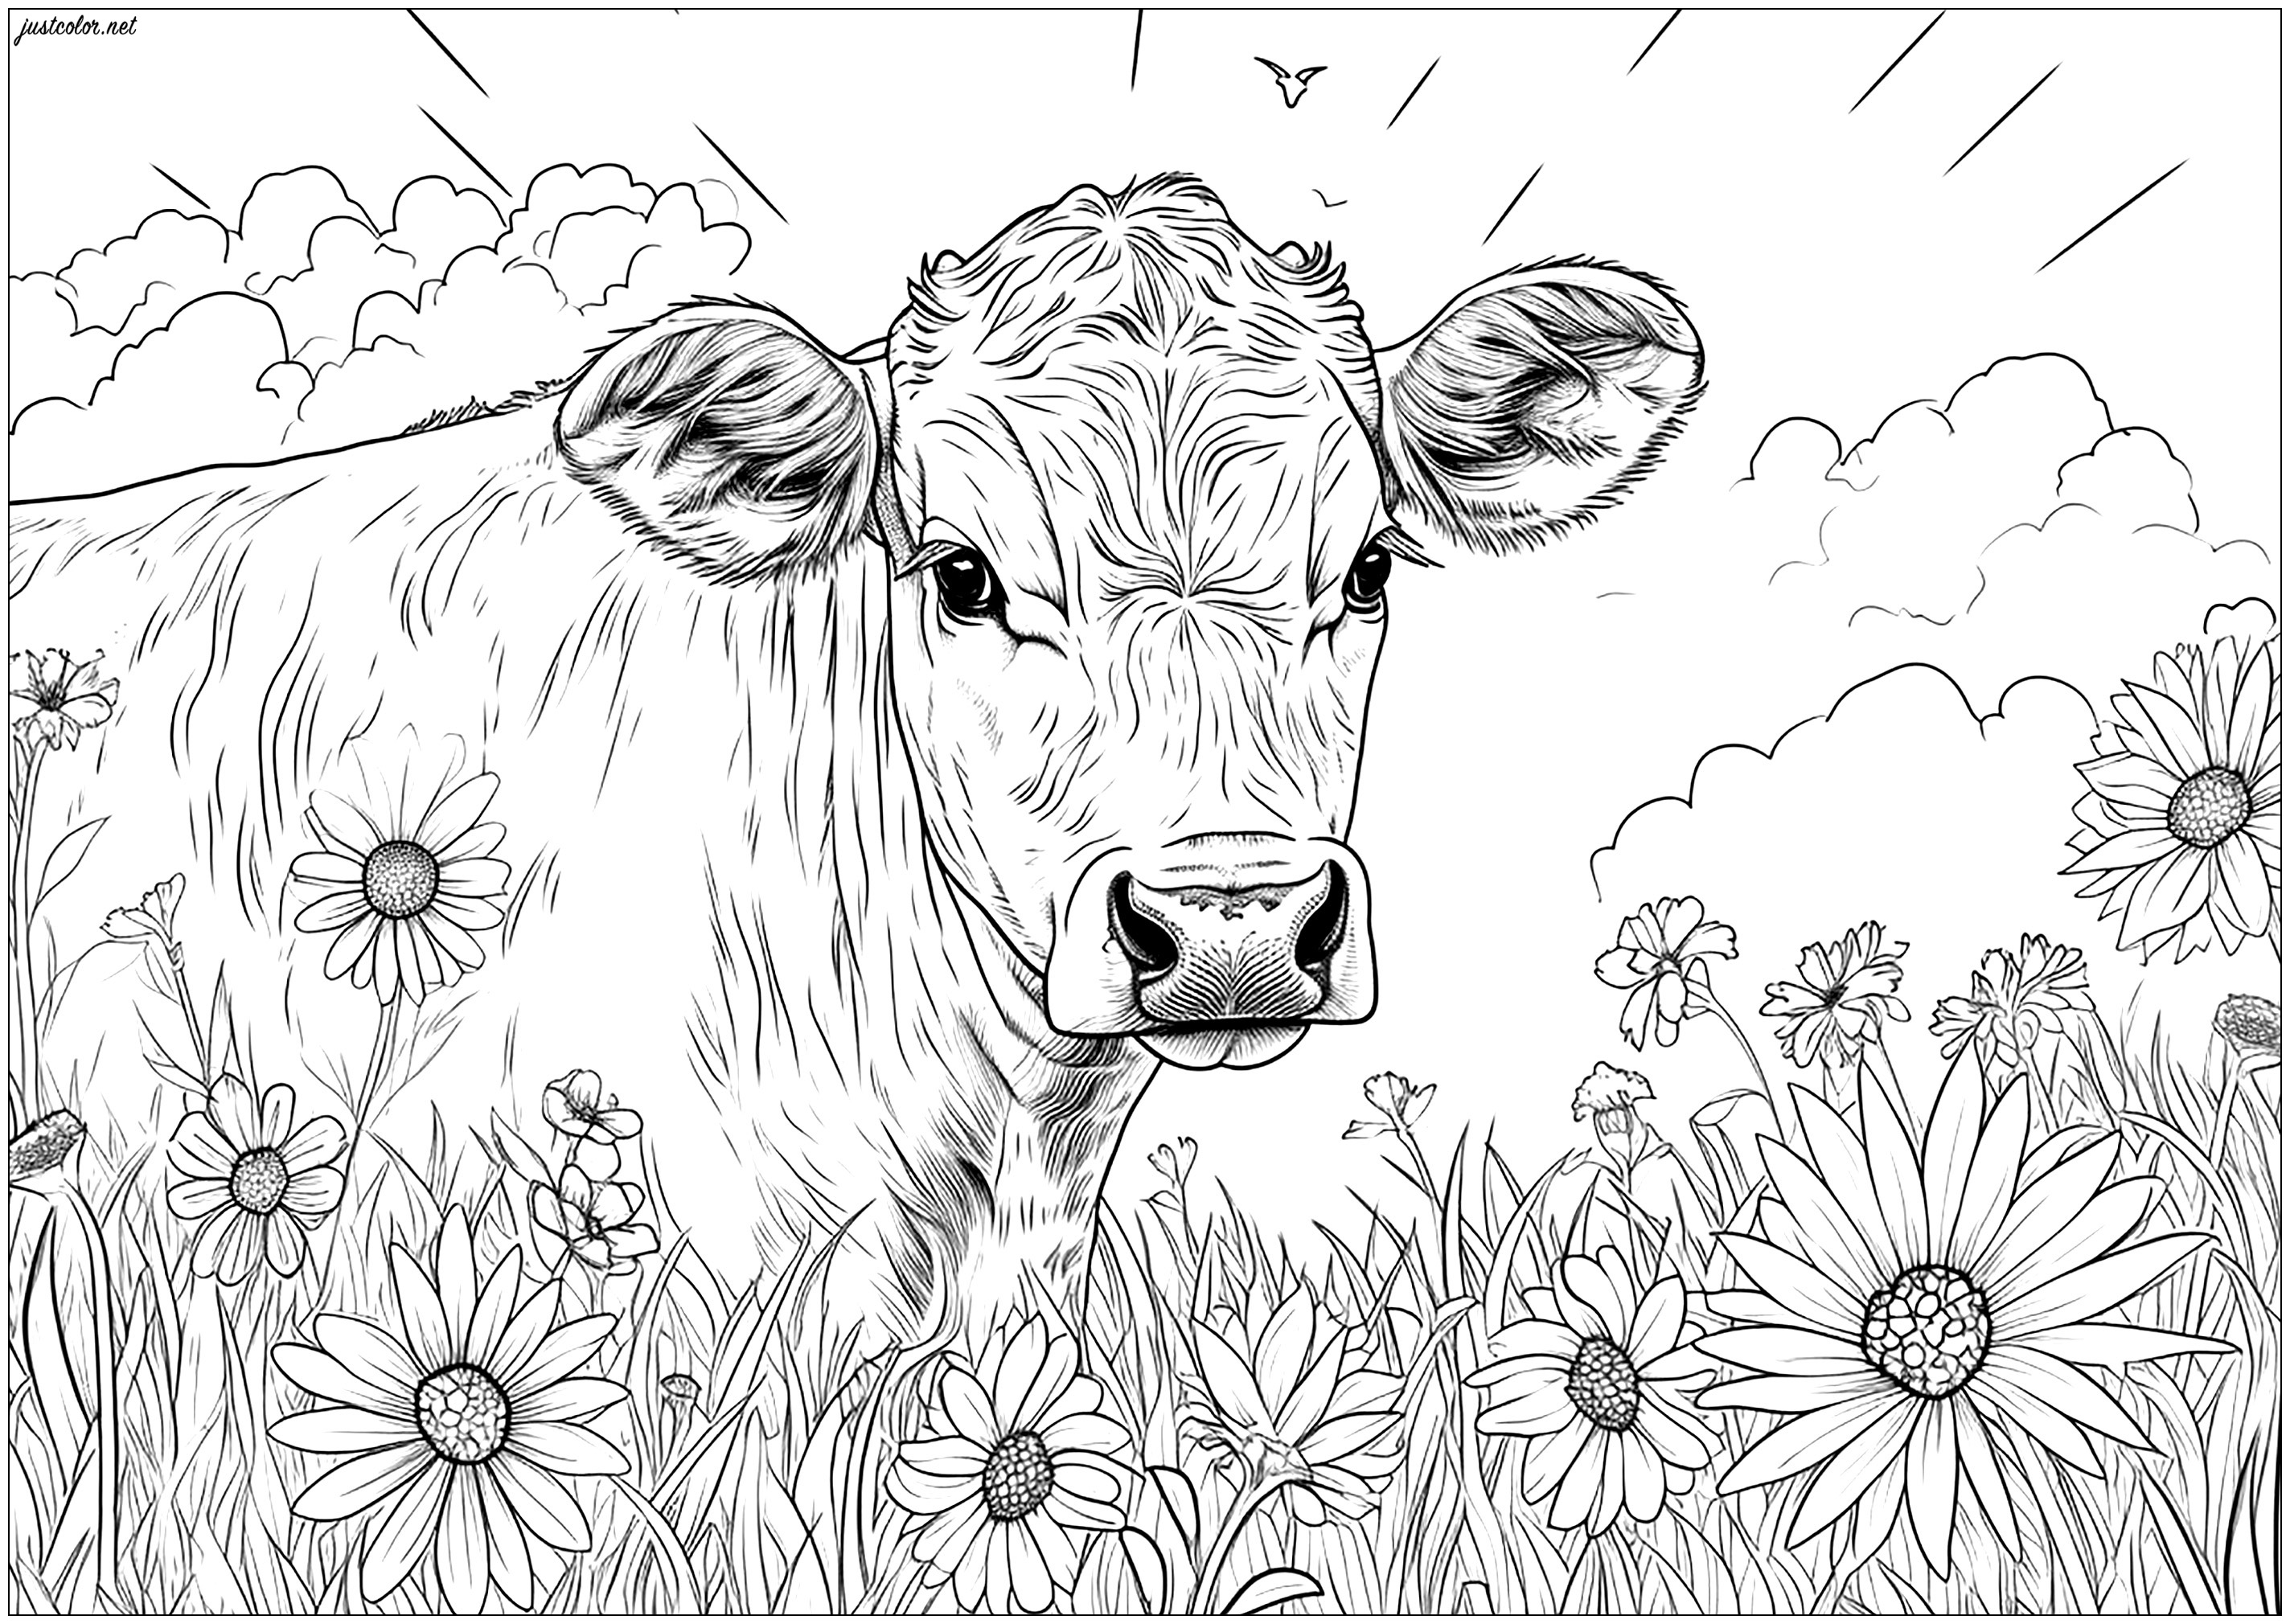 Pretty cow in flower-filled meadows